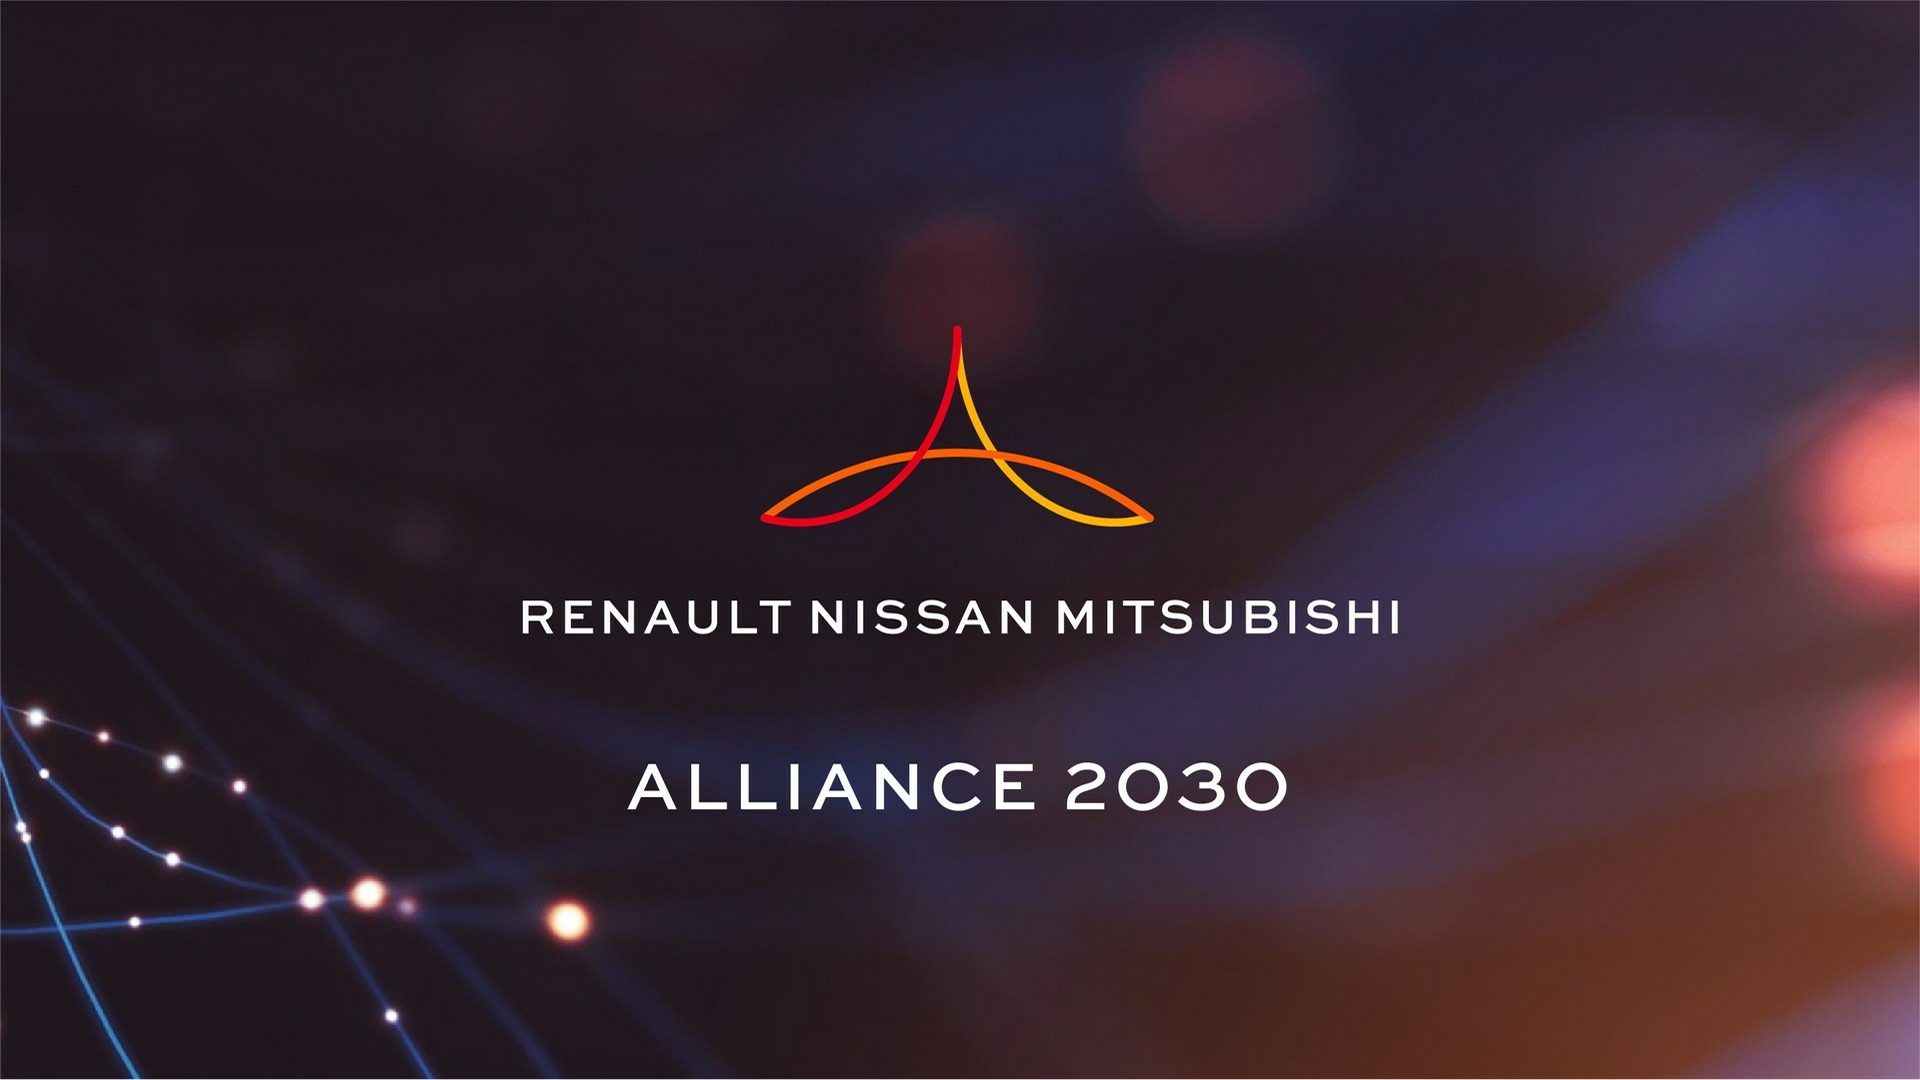 The Renault Nissan Mitsubishi Alliance Logo